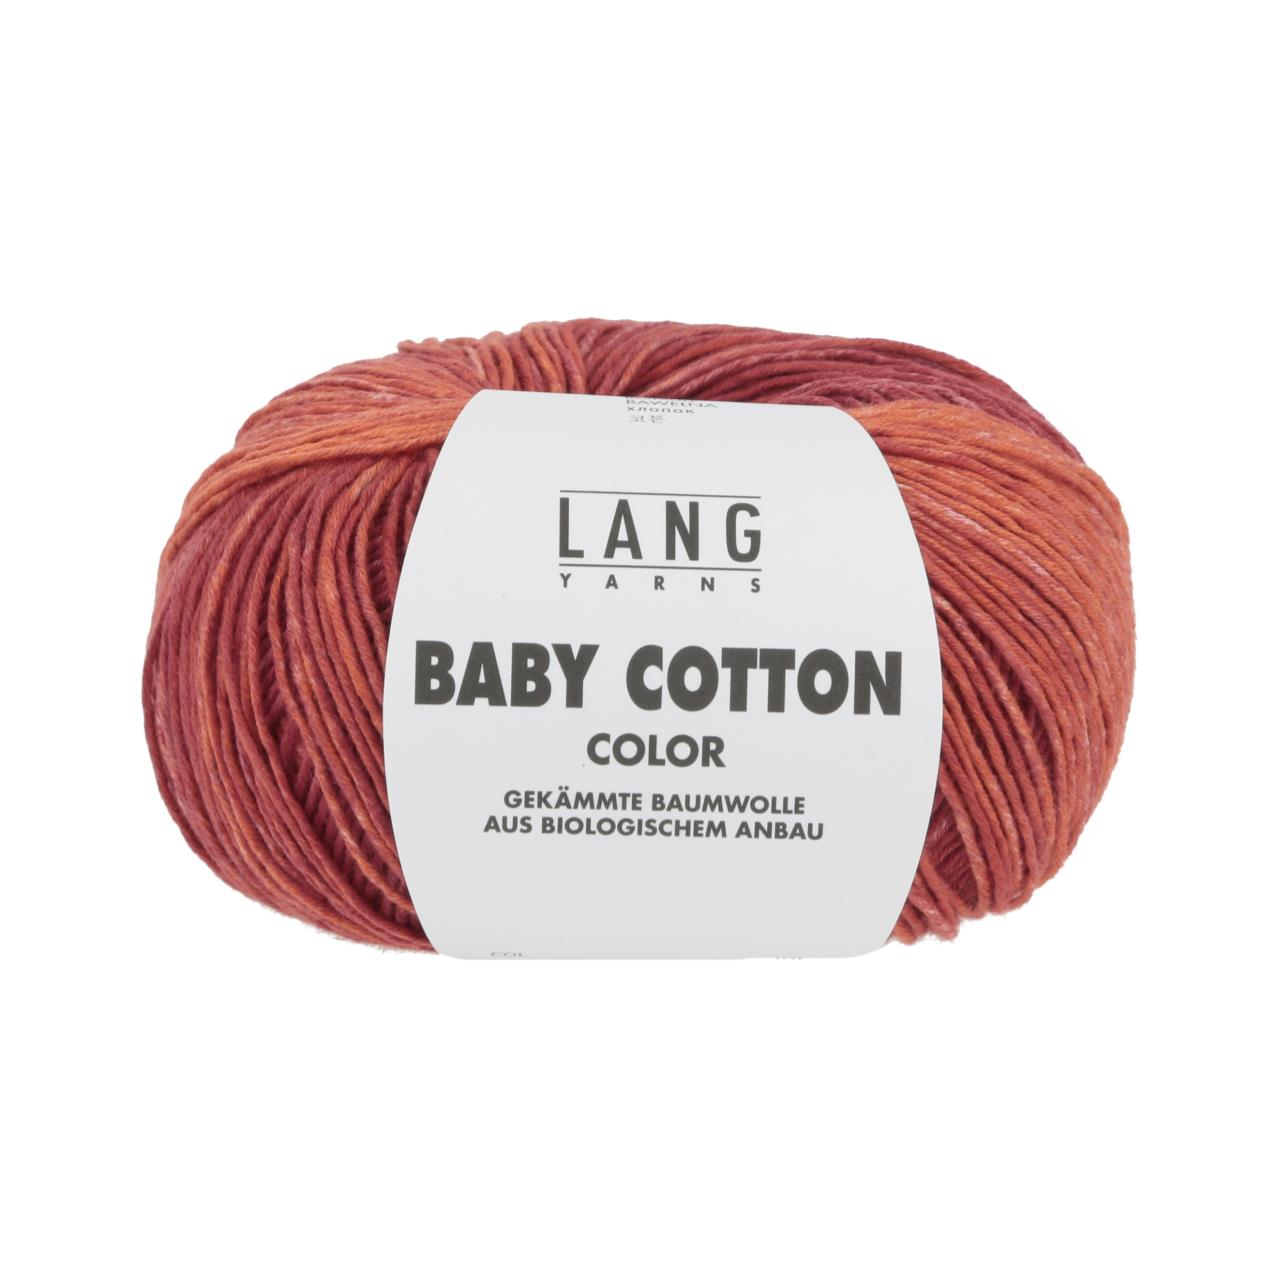 Baby Cotton Color 165 Fuchsia/Rot/Rosa